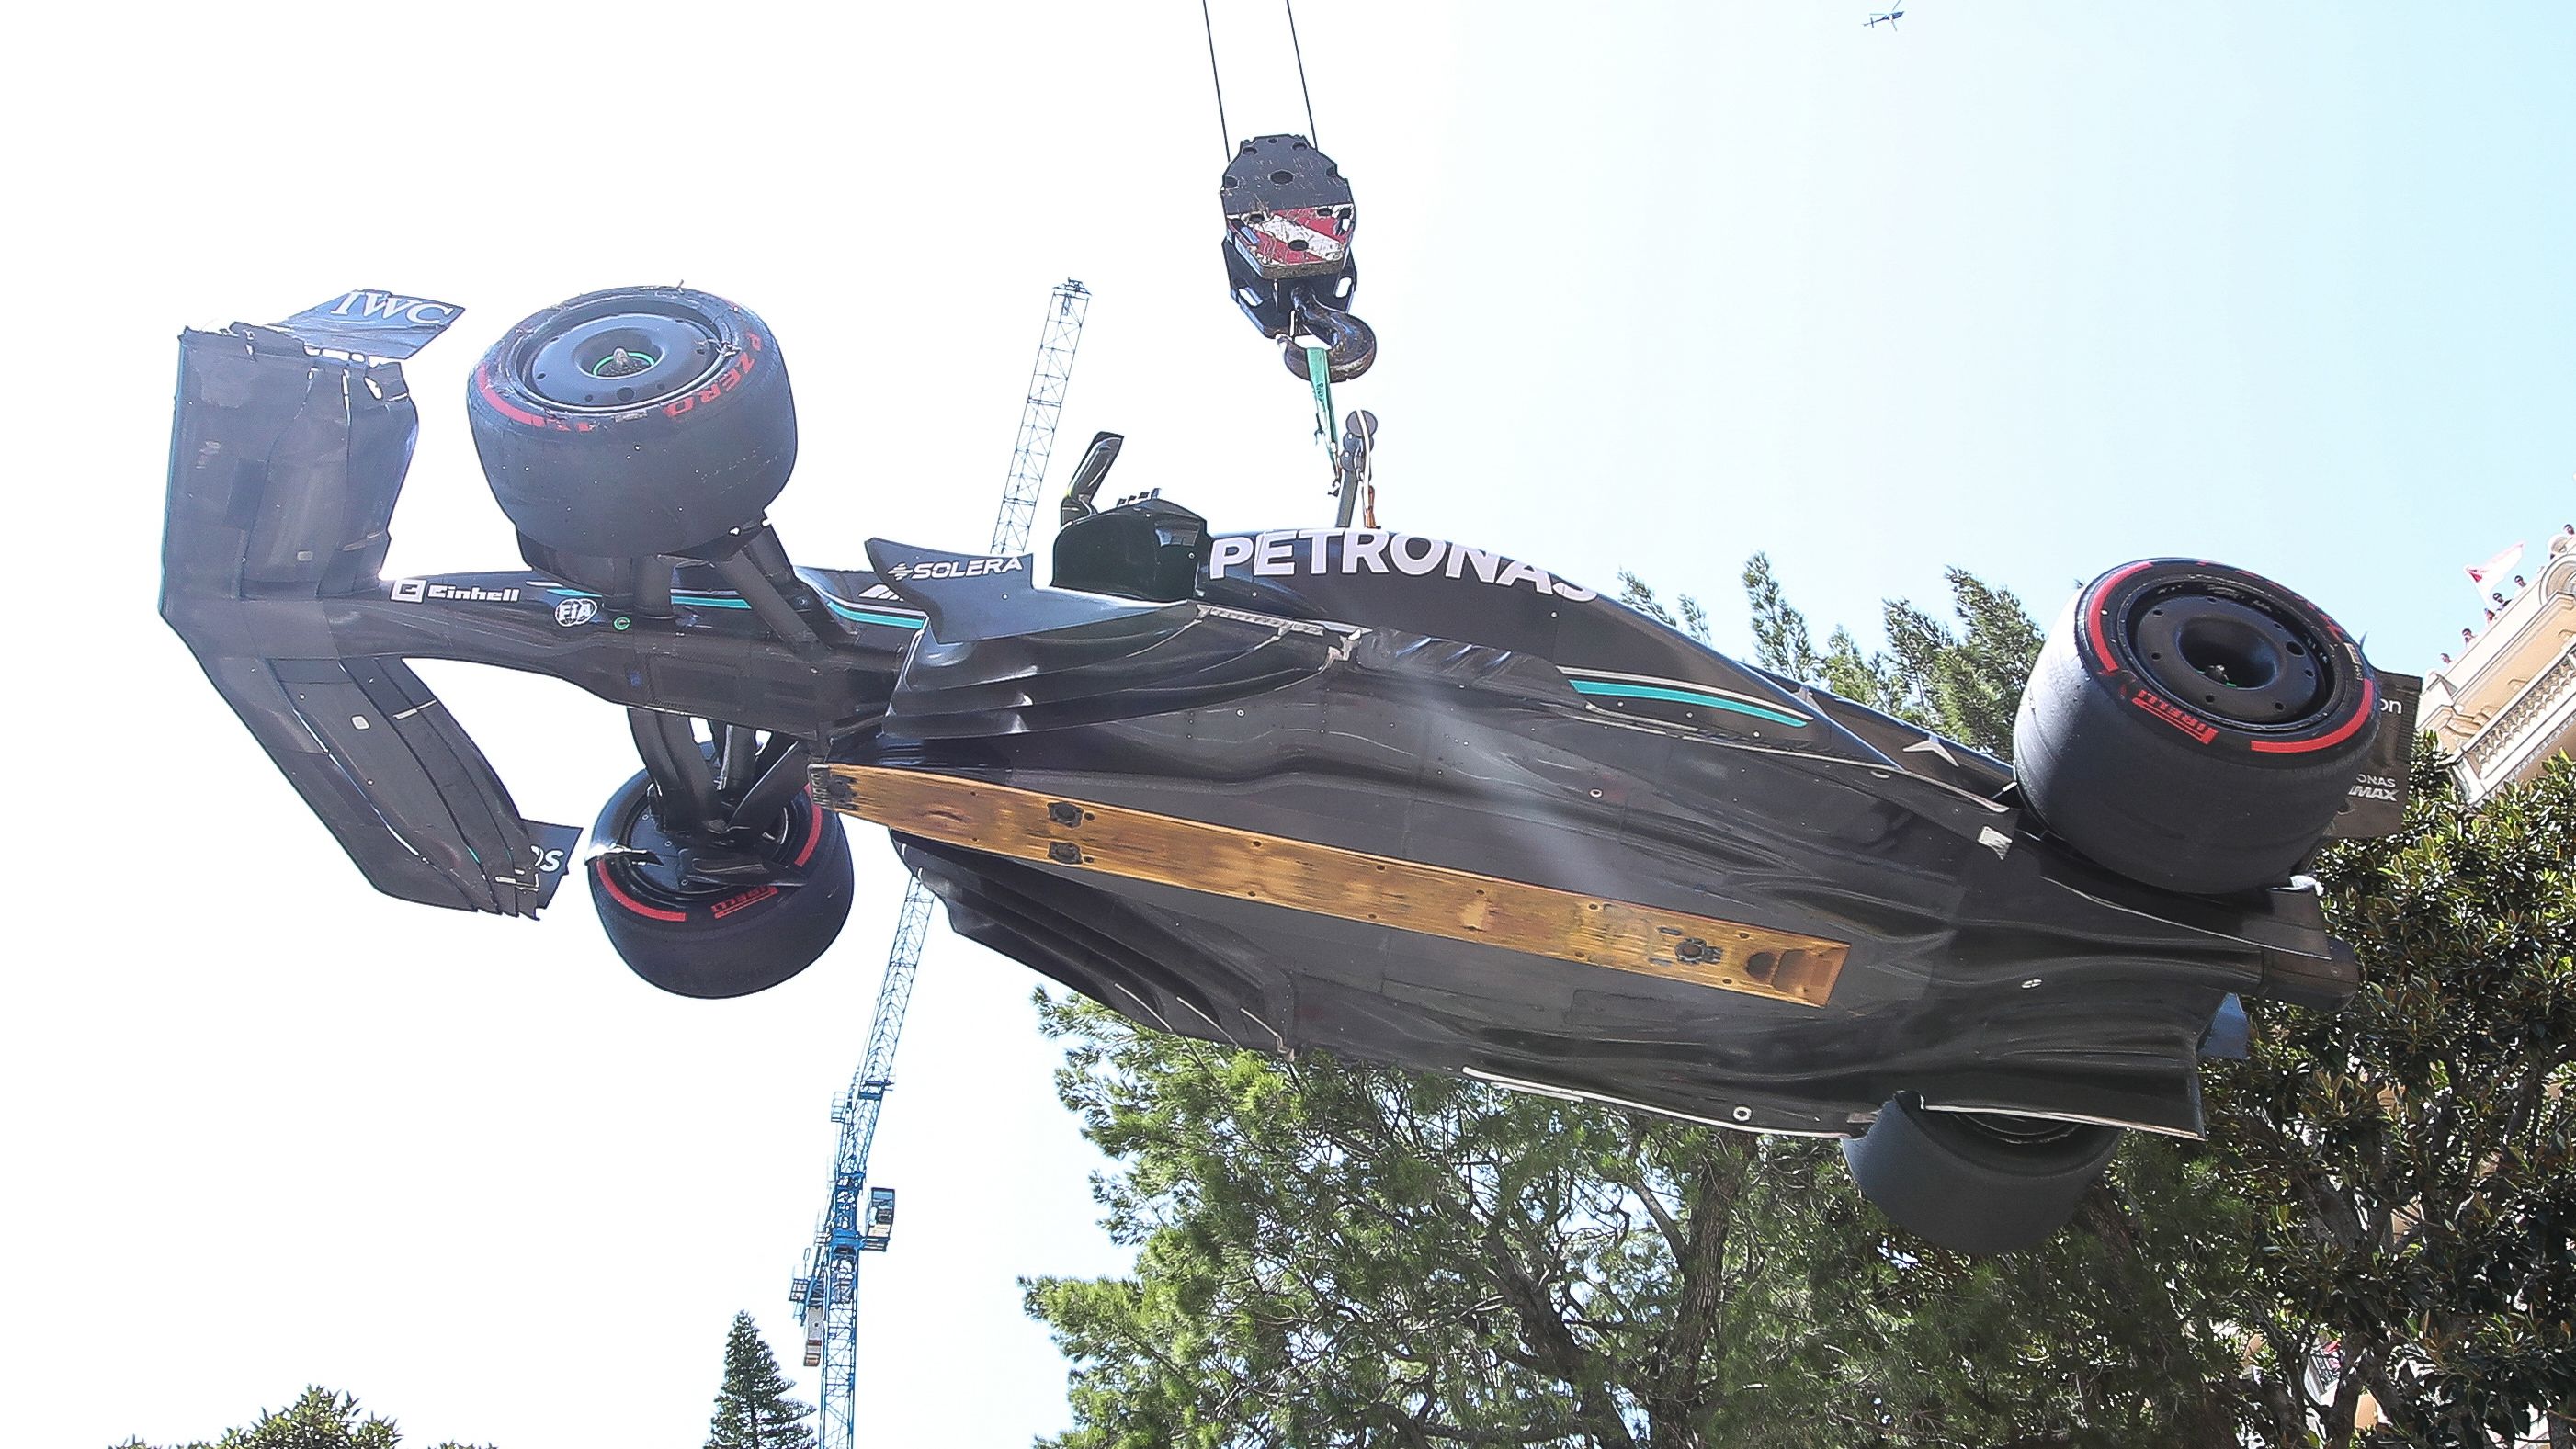 'Working for Cirque du Soleil': Mercedes boss blasts Monaco Grand Prix cranes after Lewis Hamilton crash